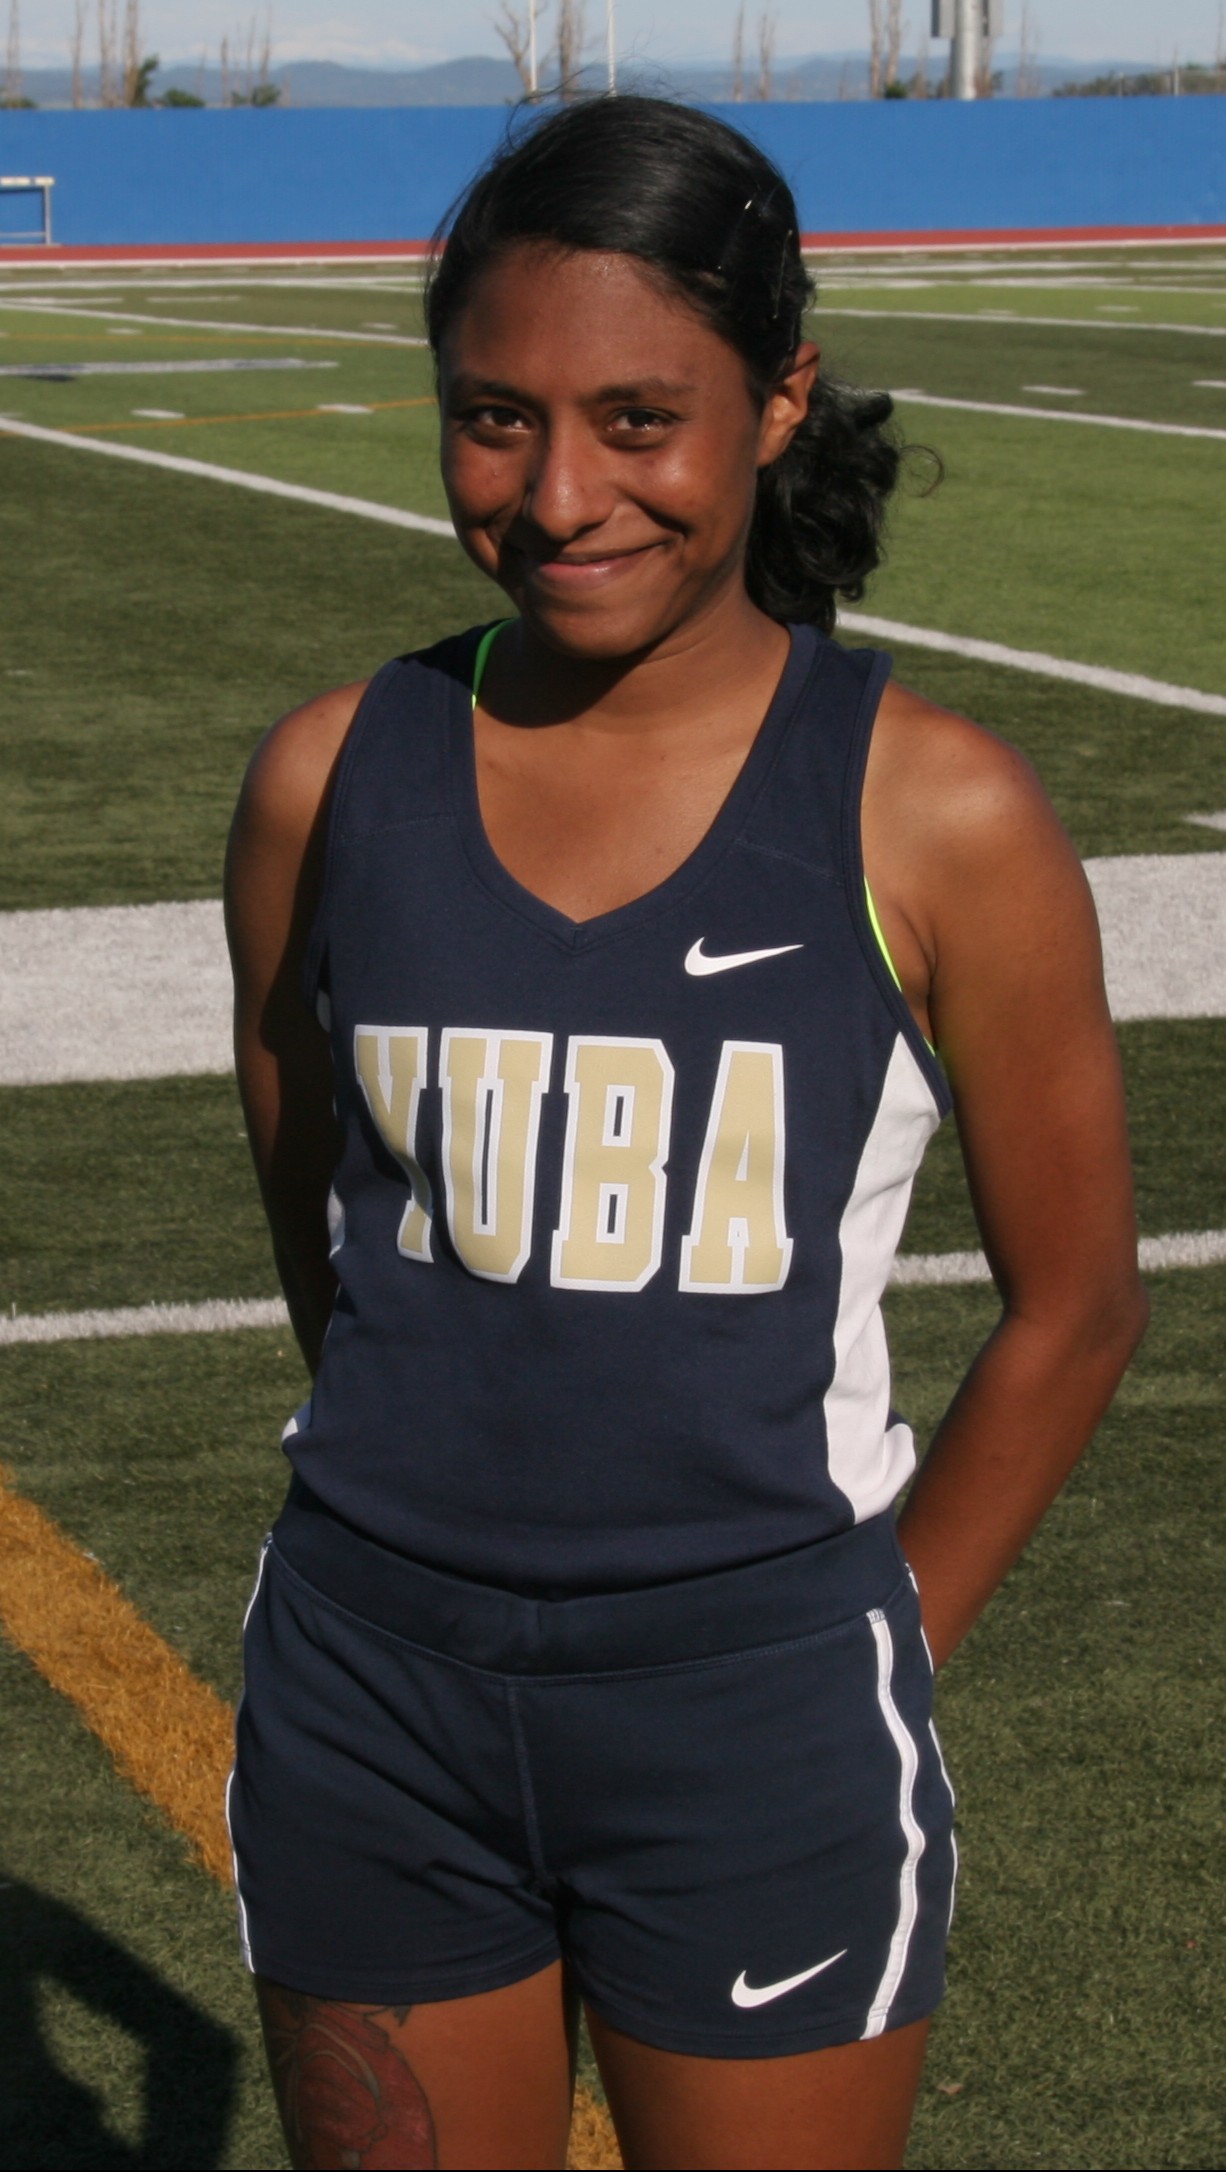 Niyia Sims after running the Women's 1500 m marathon.